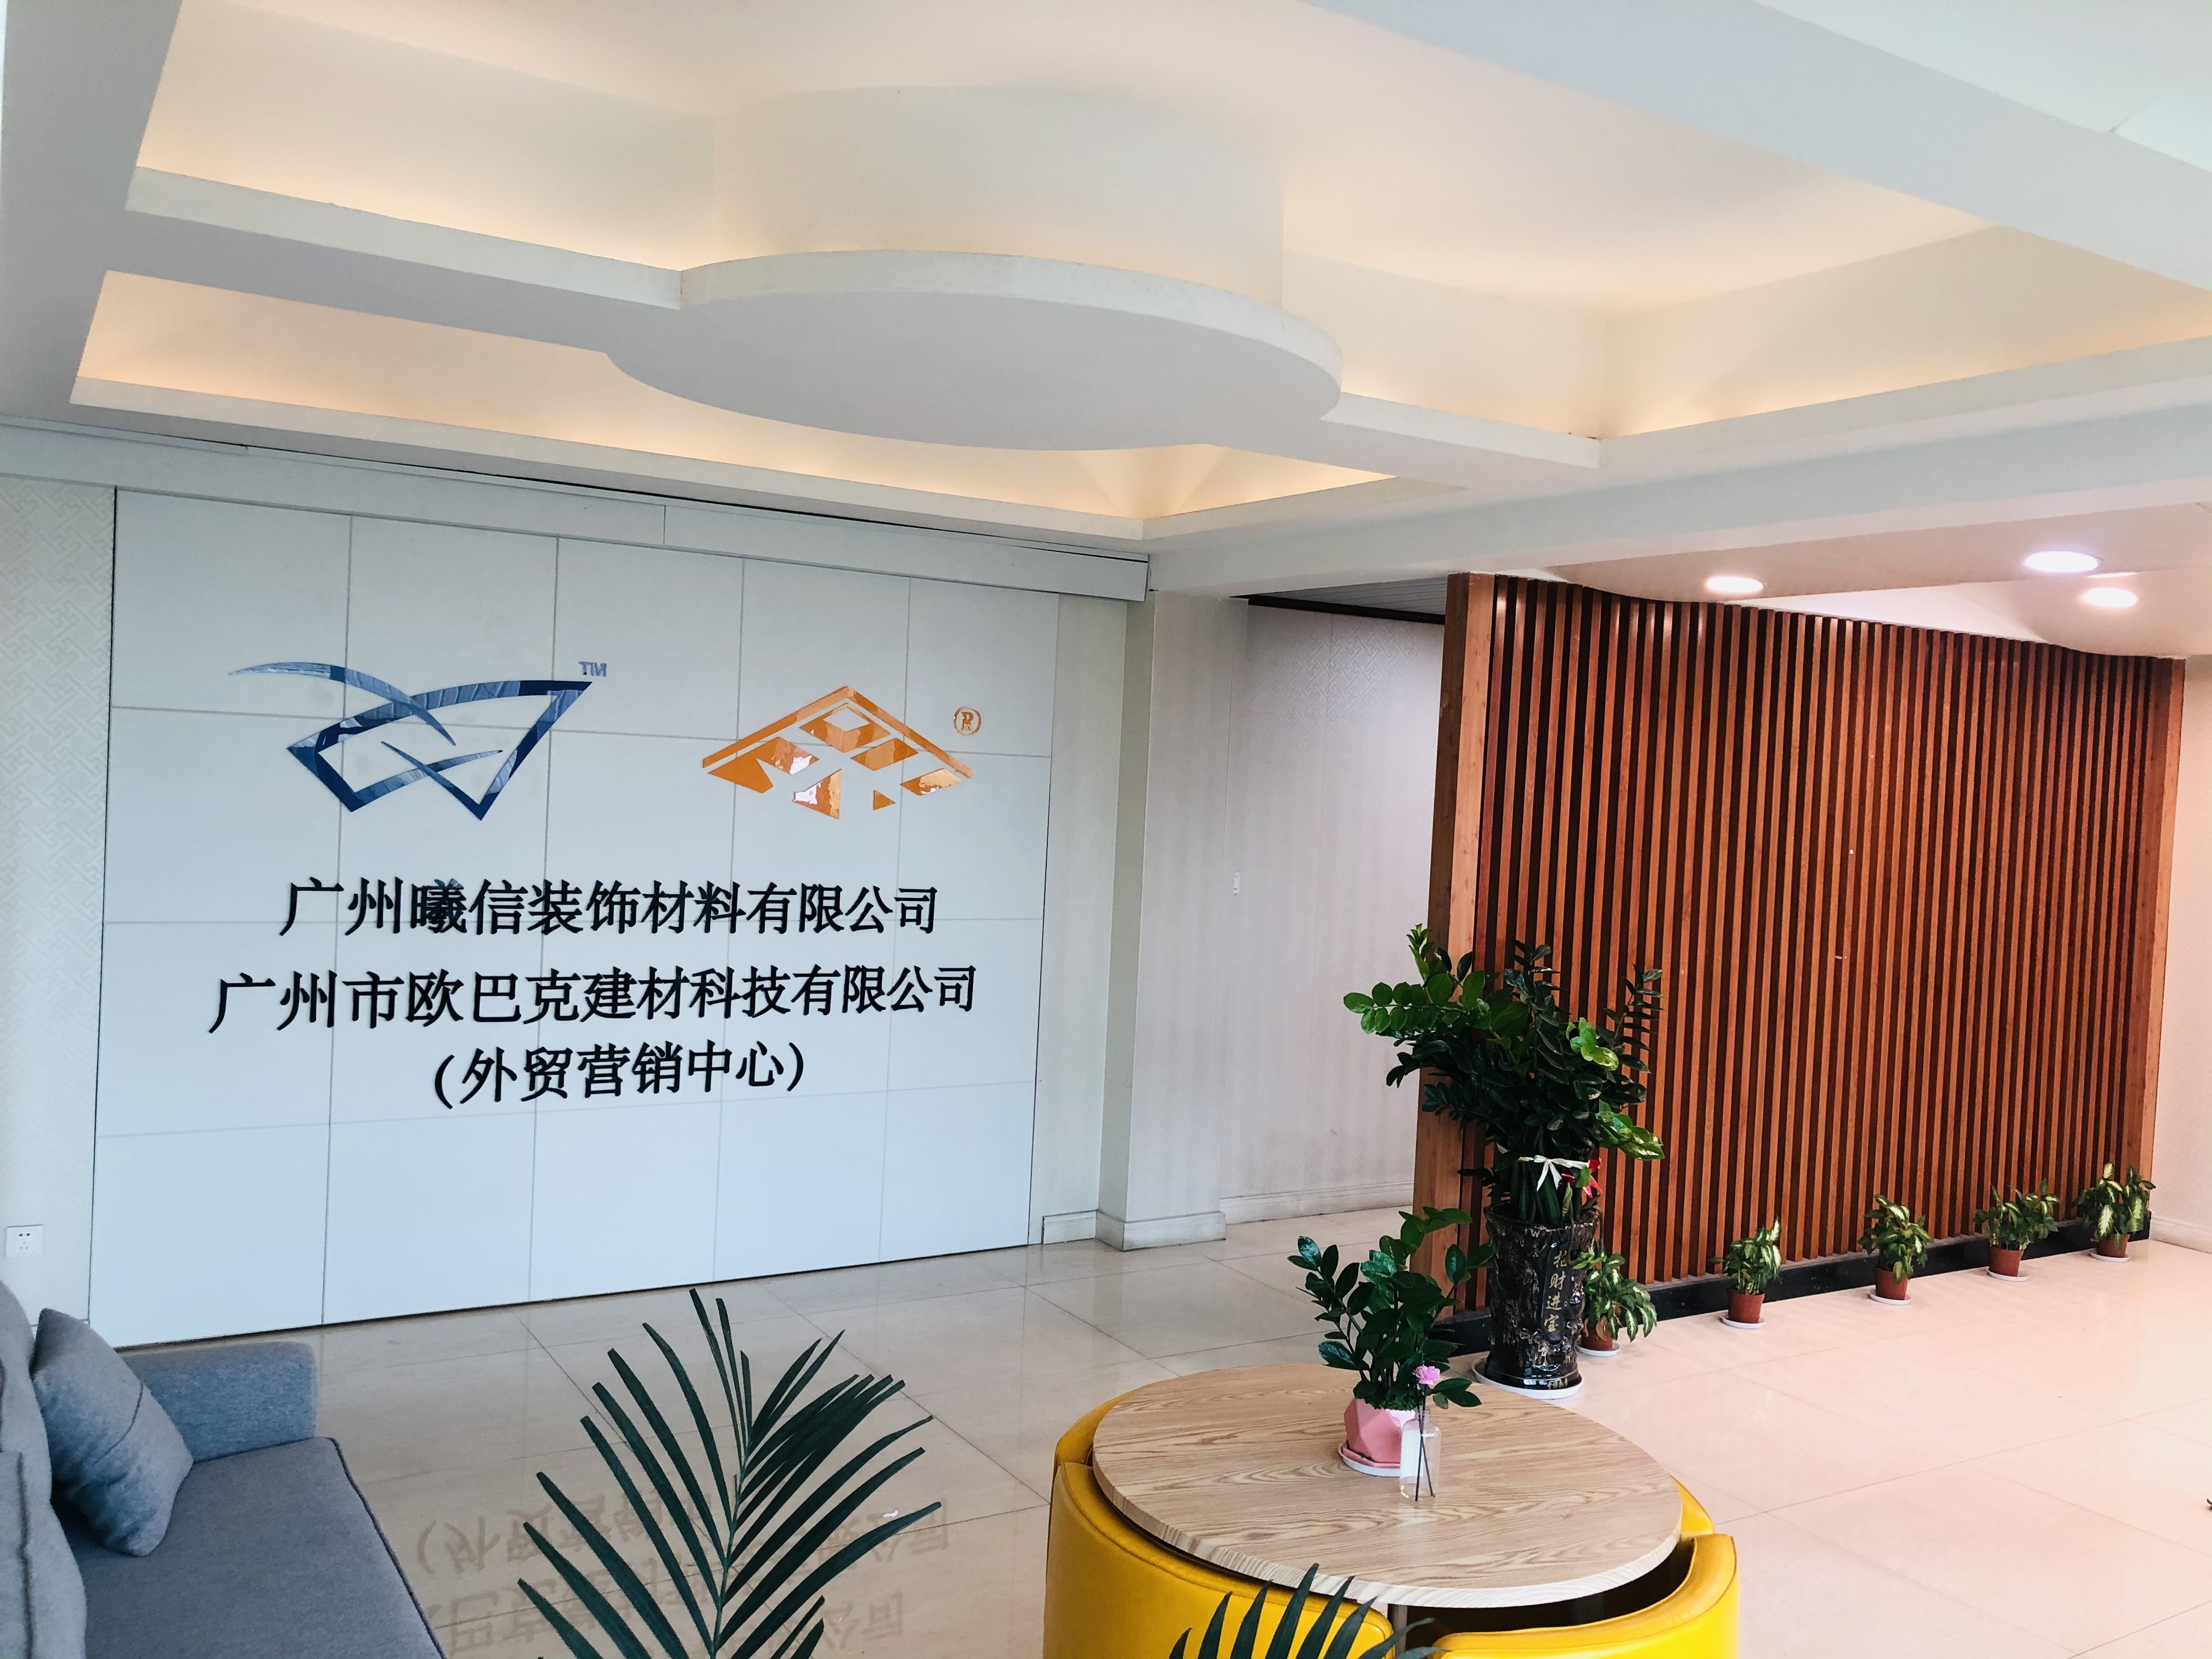 China Guangzhou Season Decoration Materials Co., Ltd. company profile